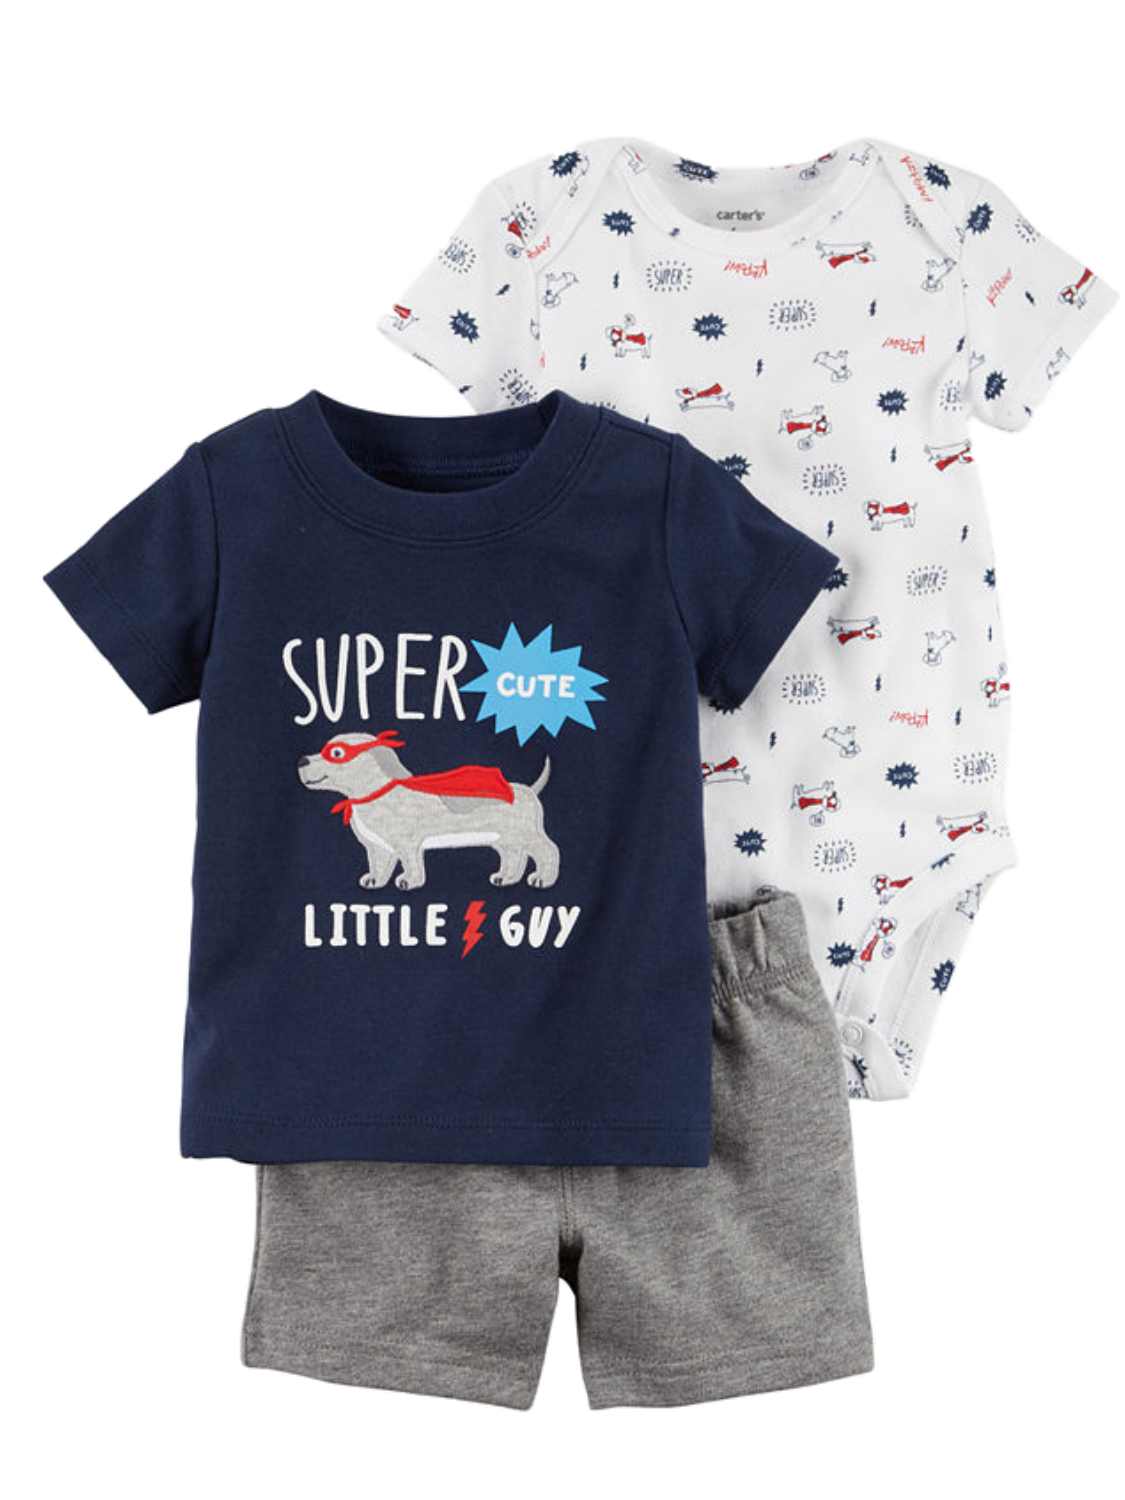 Carter's Carters Infant Boys Super Hero Dog Baby Outfits Bodysuit Shirt & Gray Shorts Set